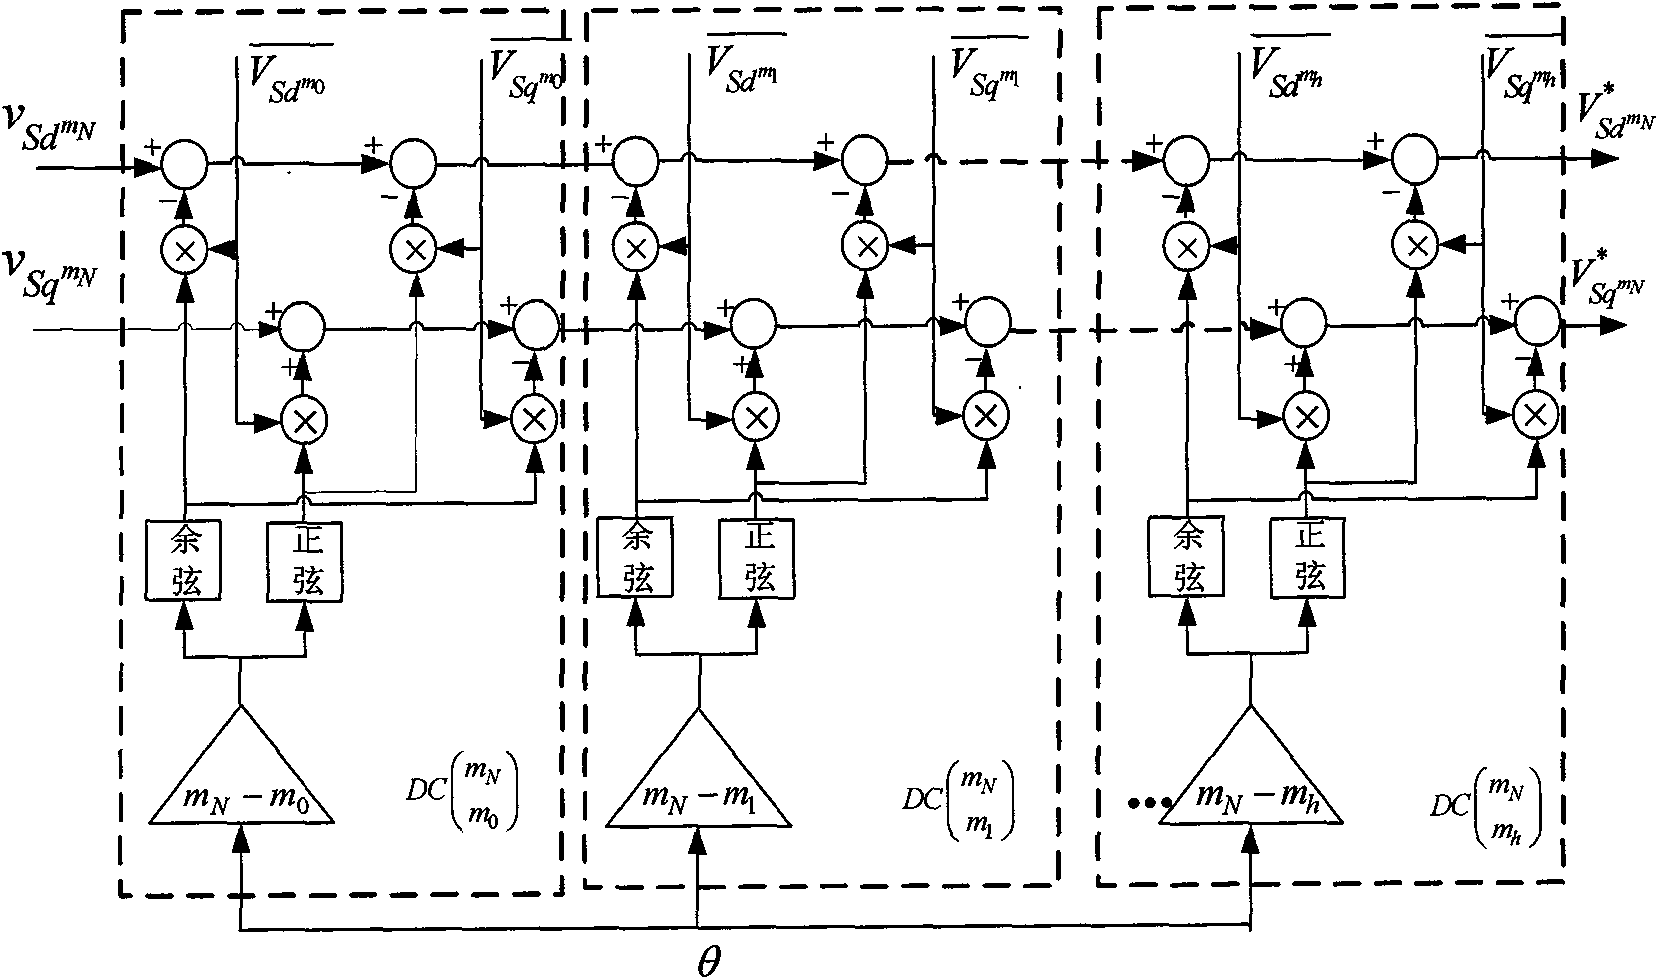 Voltage control method based on phase-lock loop of decoupling multi-coordinate system